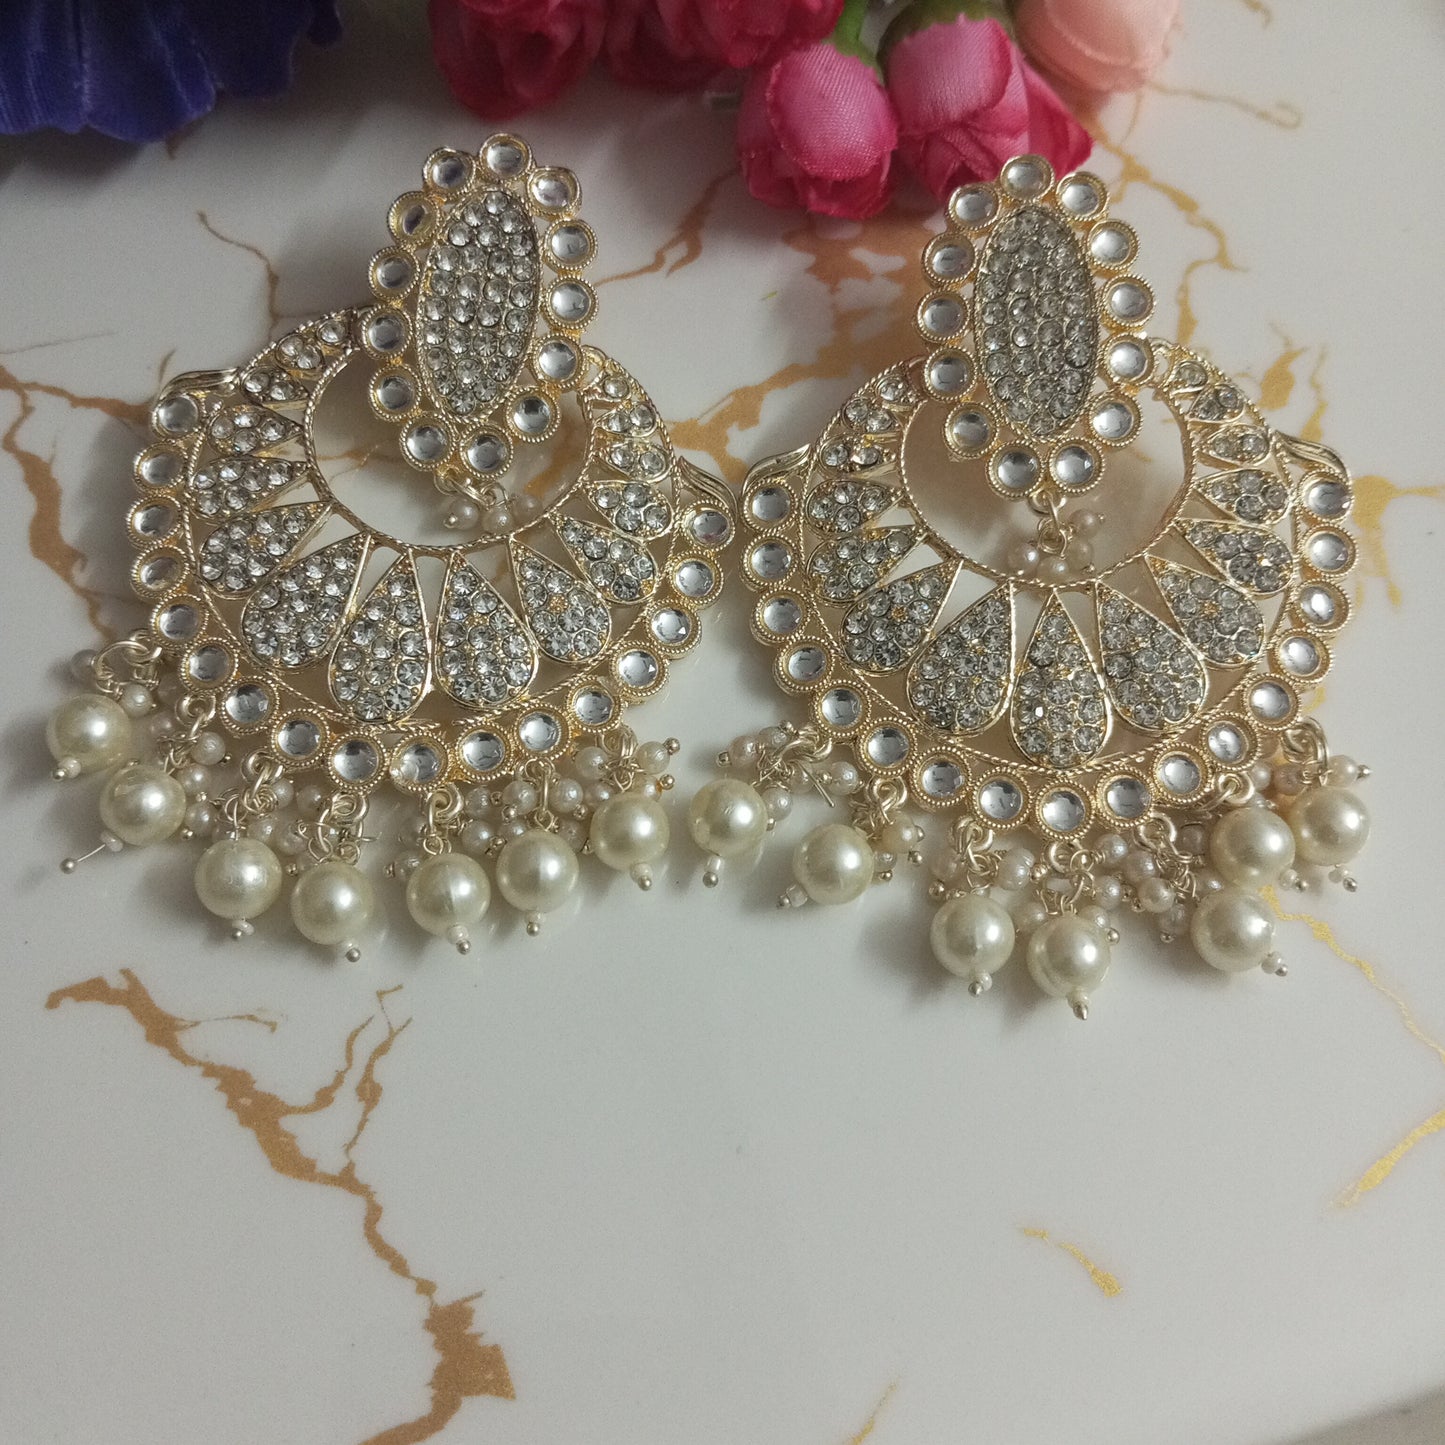 Ethnic Golden Chaandbali Earrings with Hanging Pearls